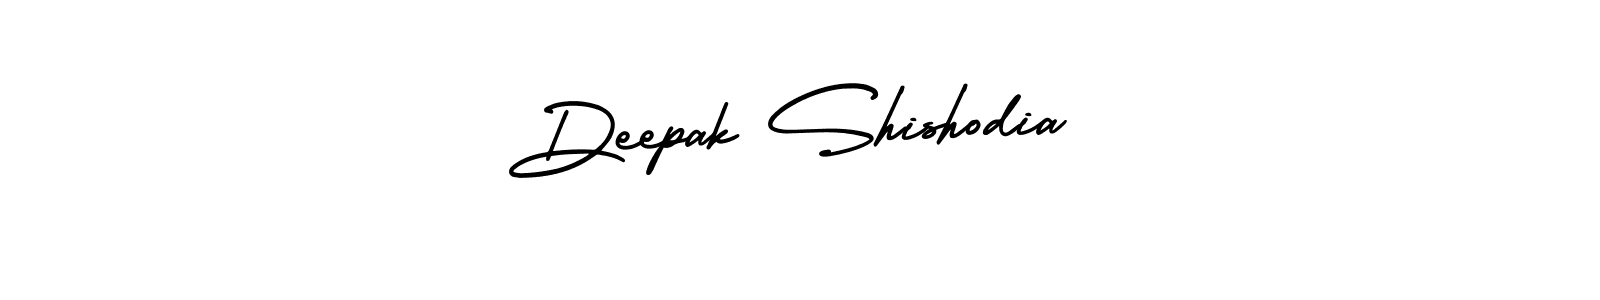 How to Draw Deepak Shishodia signature style? AmerikaSignatureDemo-Regular is a latest design signature styles for name Deepak Shishodia. Deepak Shishodia signature style 3 images and pictures png